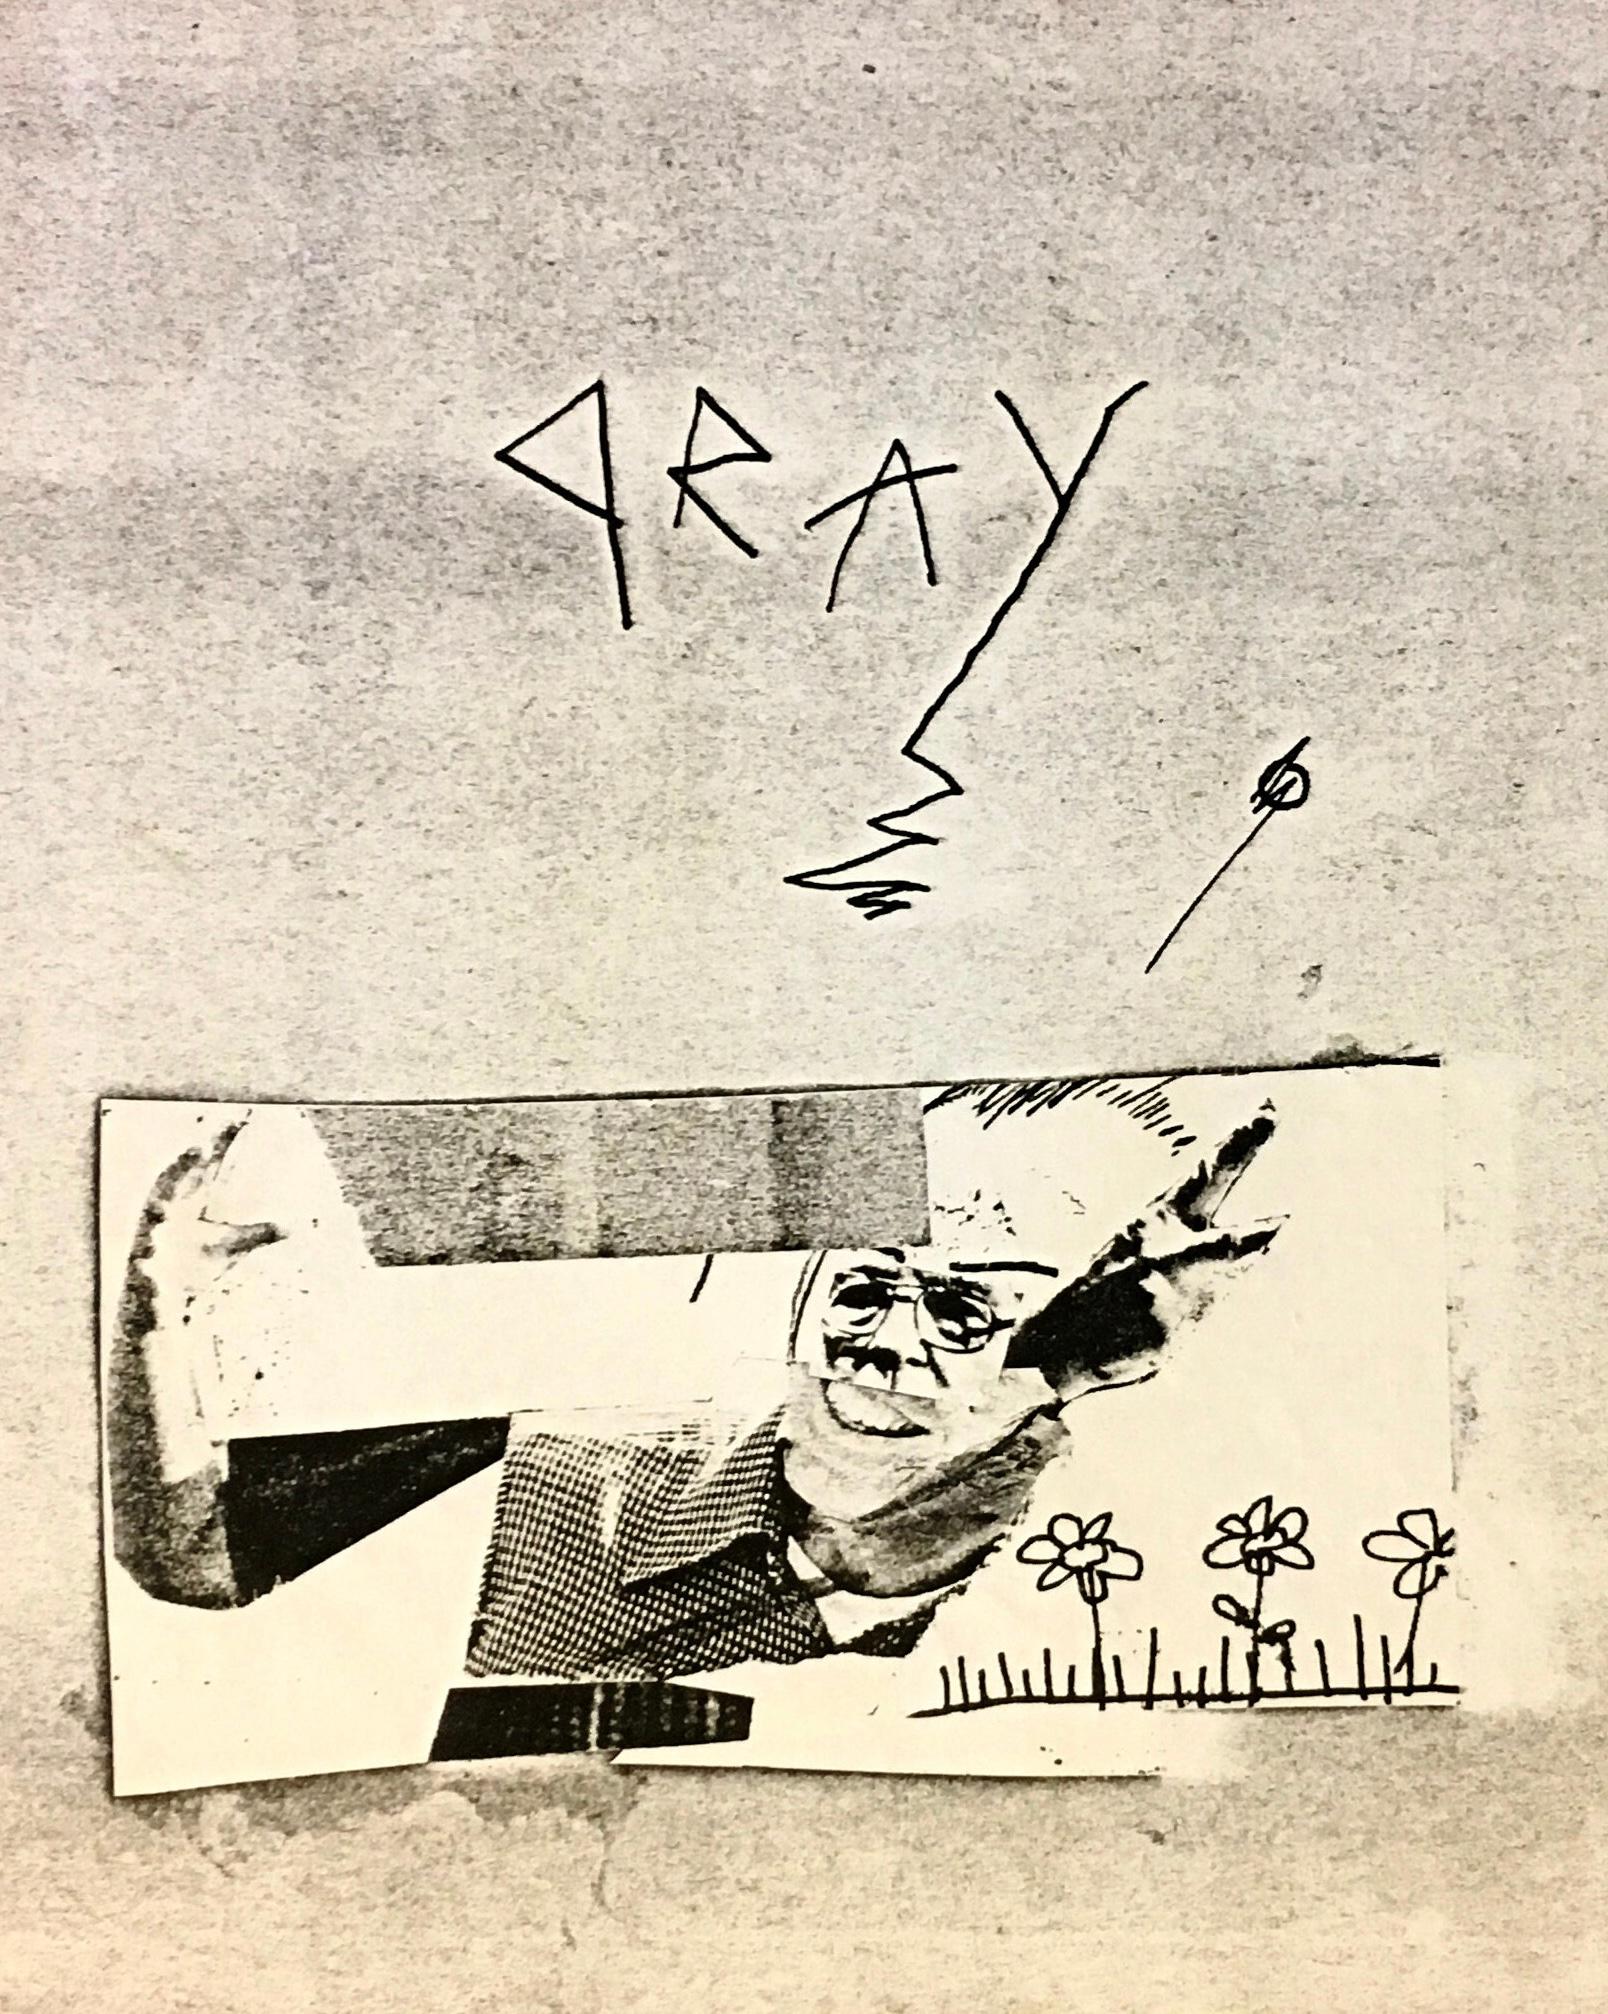 Basquiat Gray 1980 - Print by Jean-Michel Basquiat